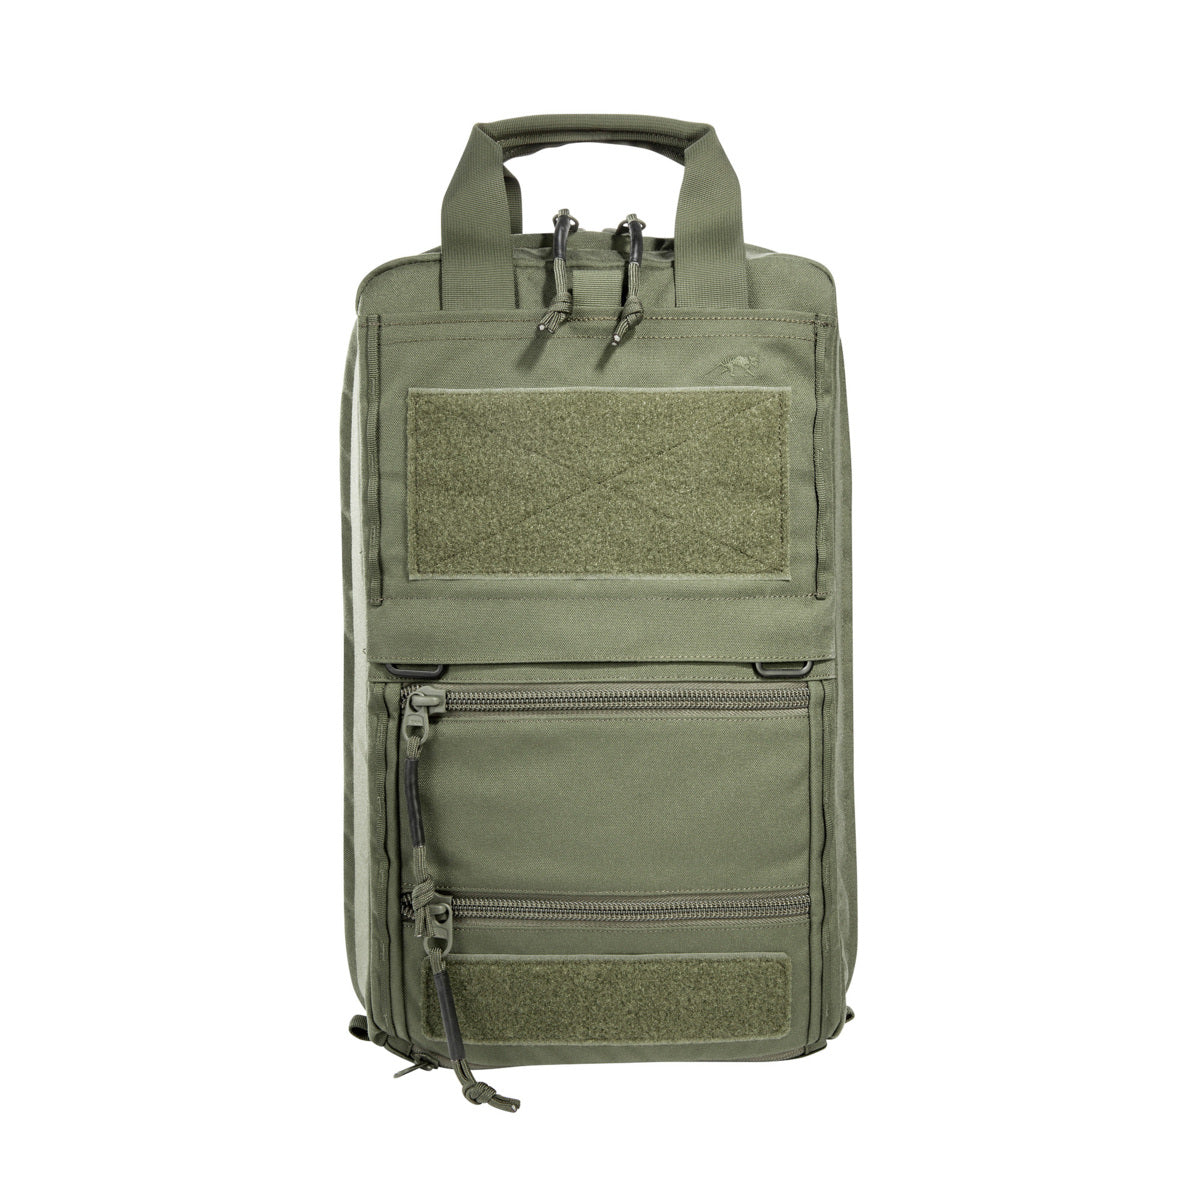 Tasmanian Tiger TT Survival Pack Backpack Bags, Packs and Cases Tasmanian Tiger Tactical Gear Supplier Tactical Distributors Australia